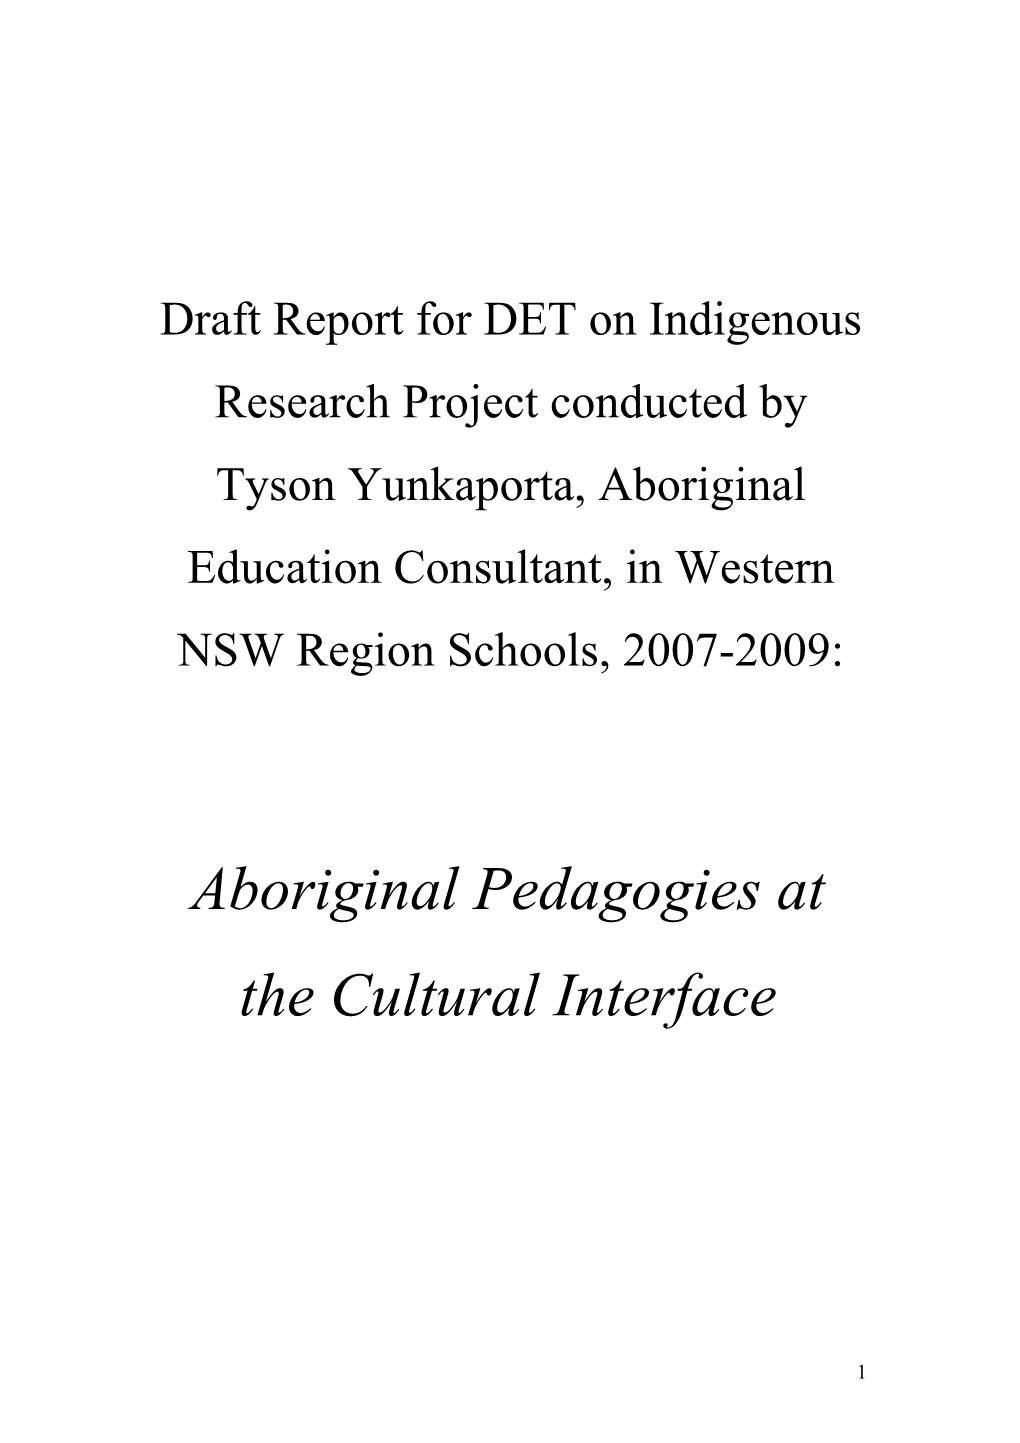 Aboriginal Pedagogies at the Cultural Interface